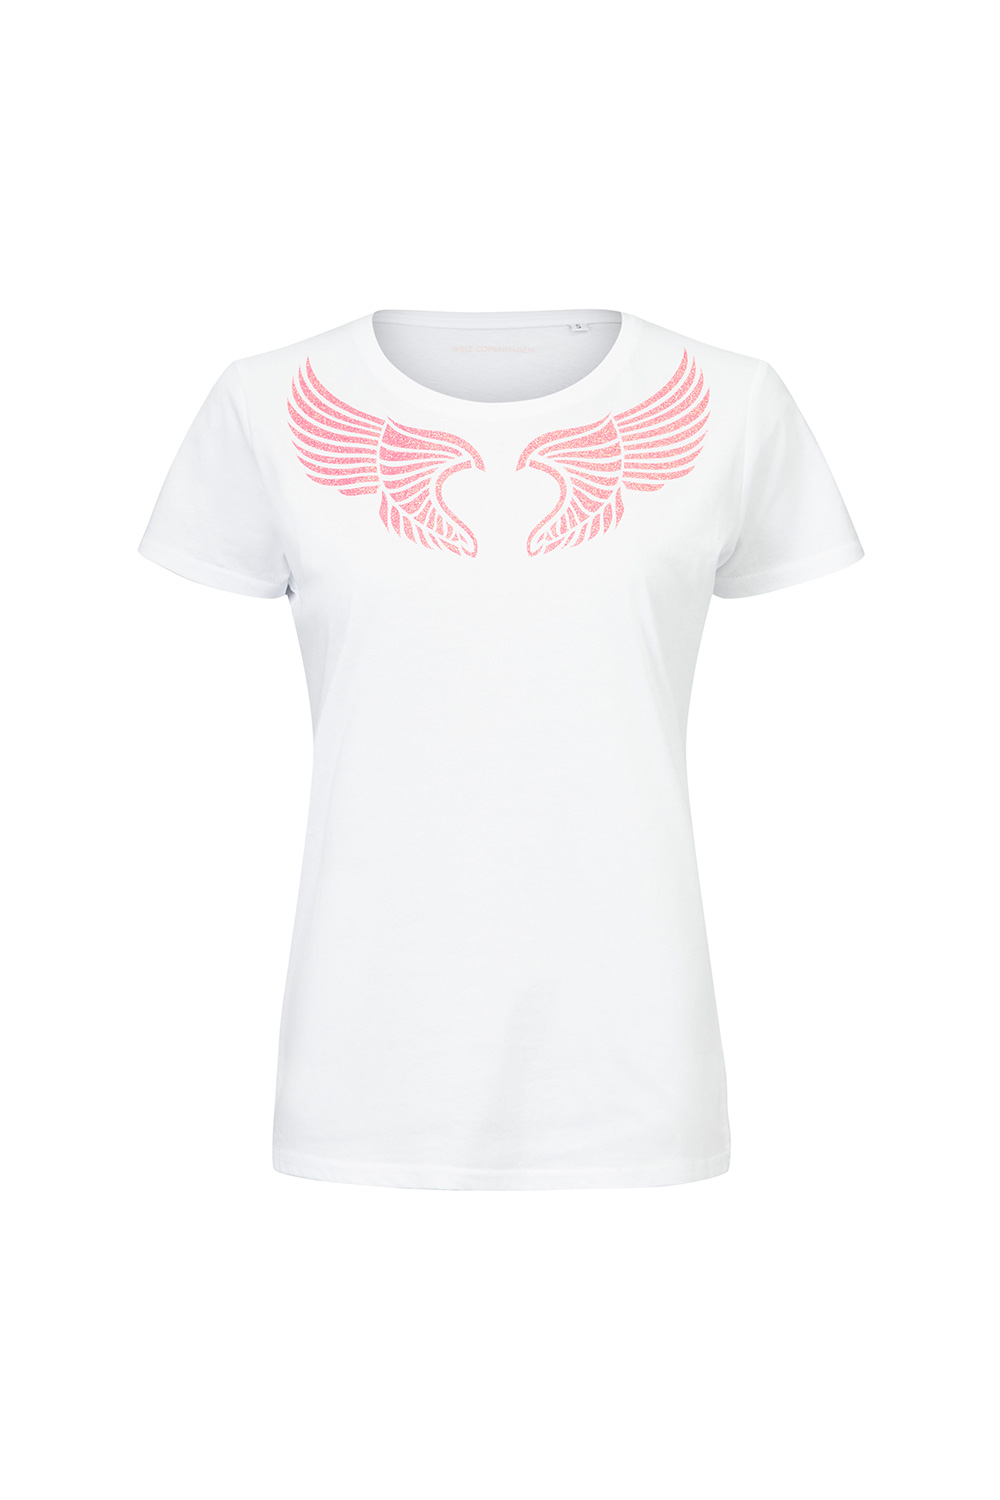 Wing T-Shirt White